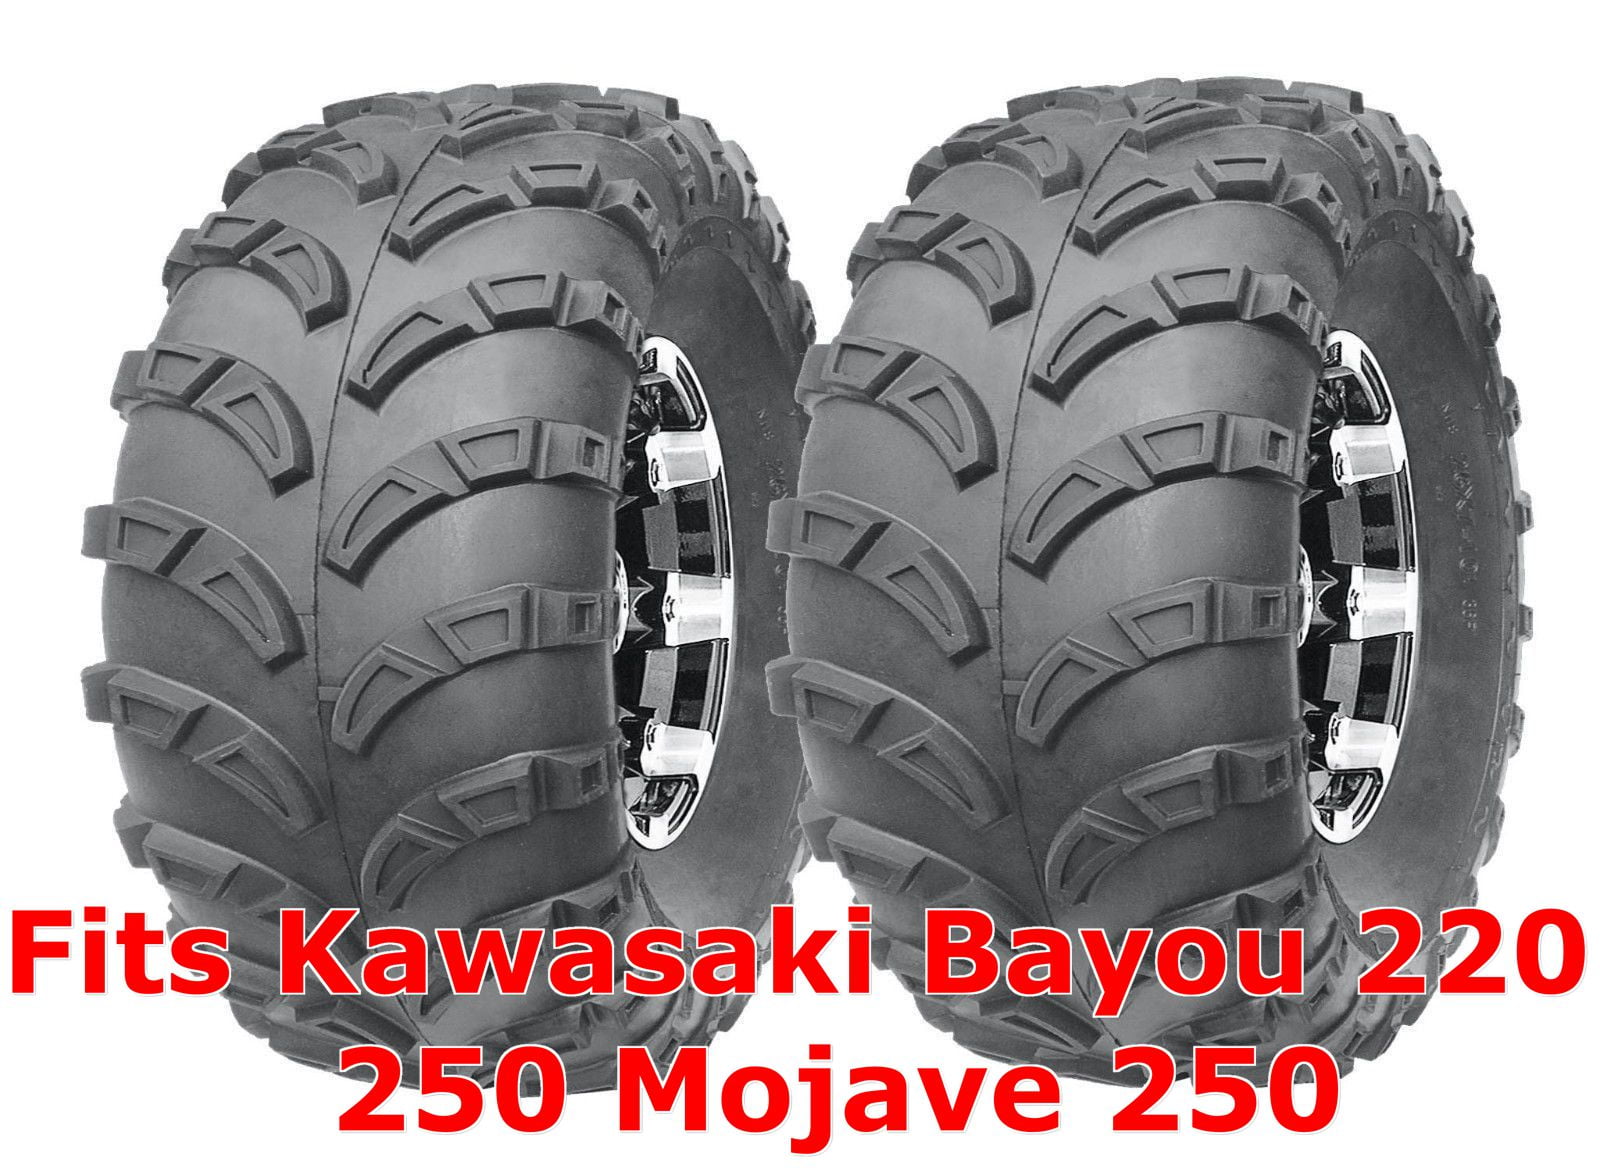 22x10-10 QUADKING ATV TIRES Kawasaki Bayou 220 All 4 Tires 21x8-9